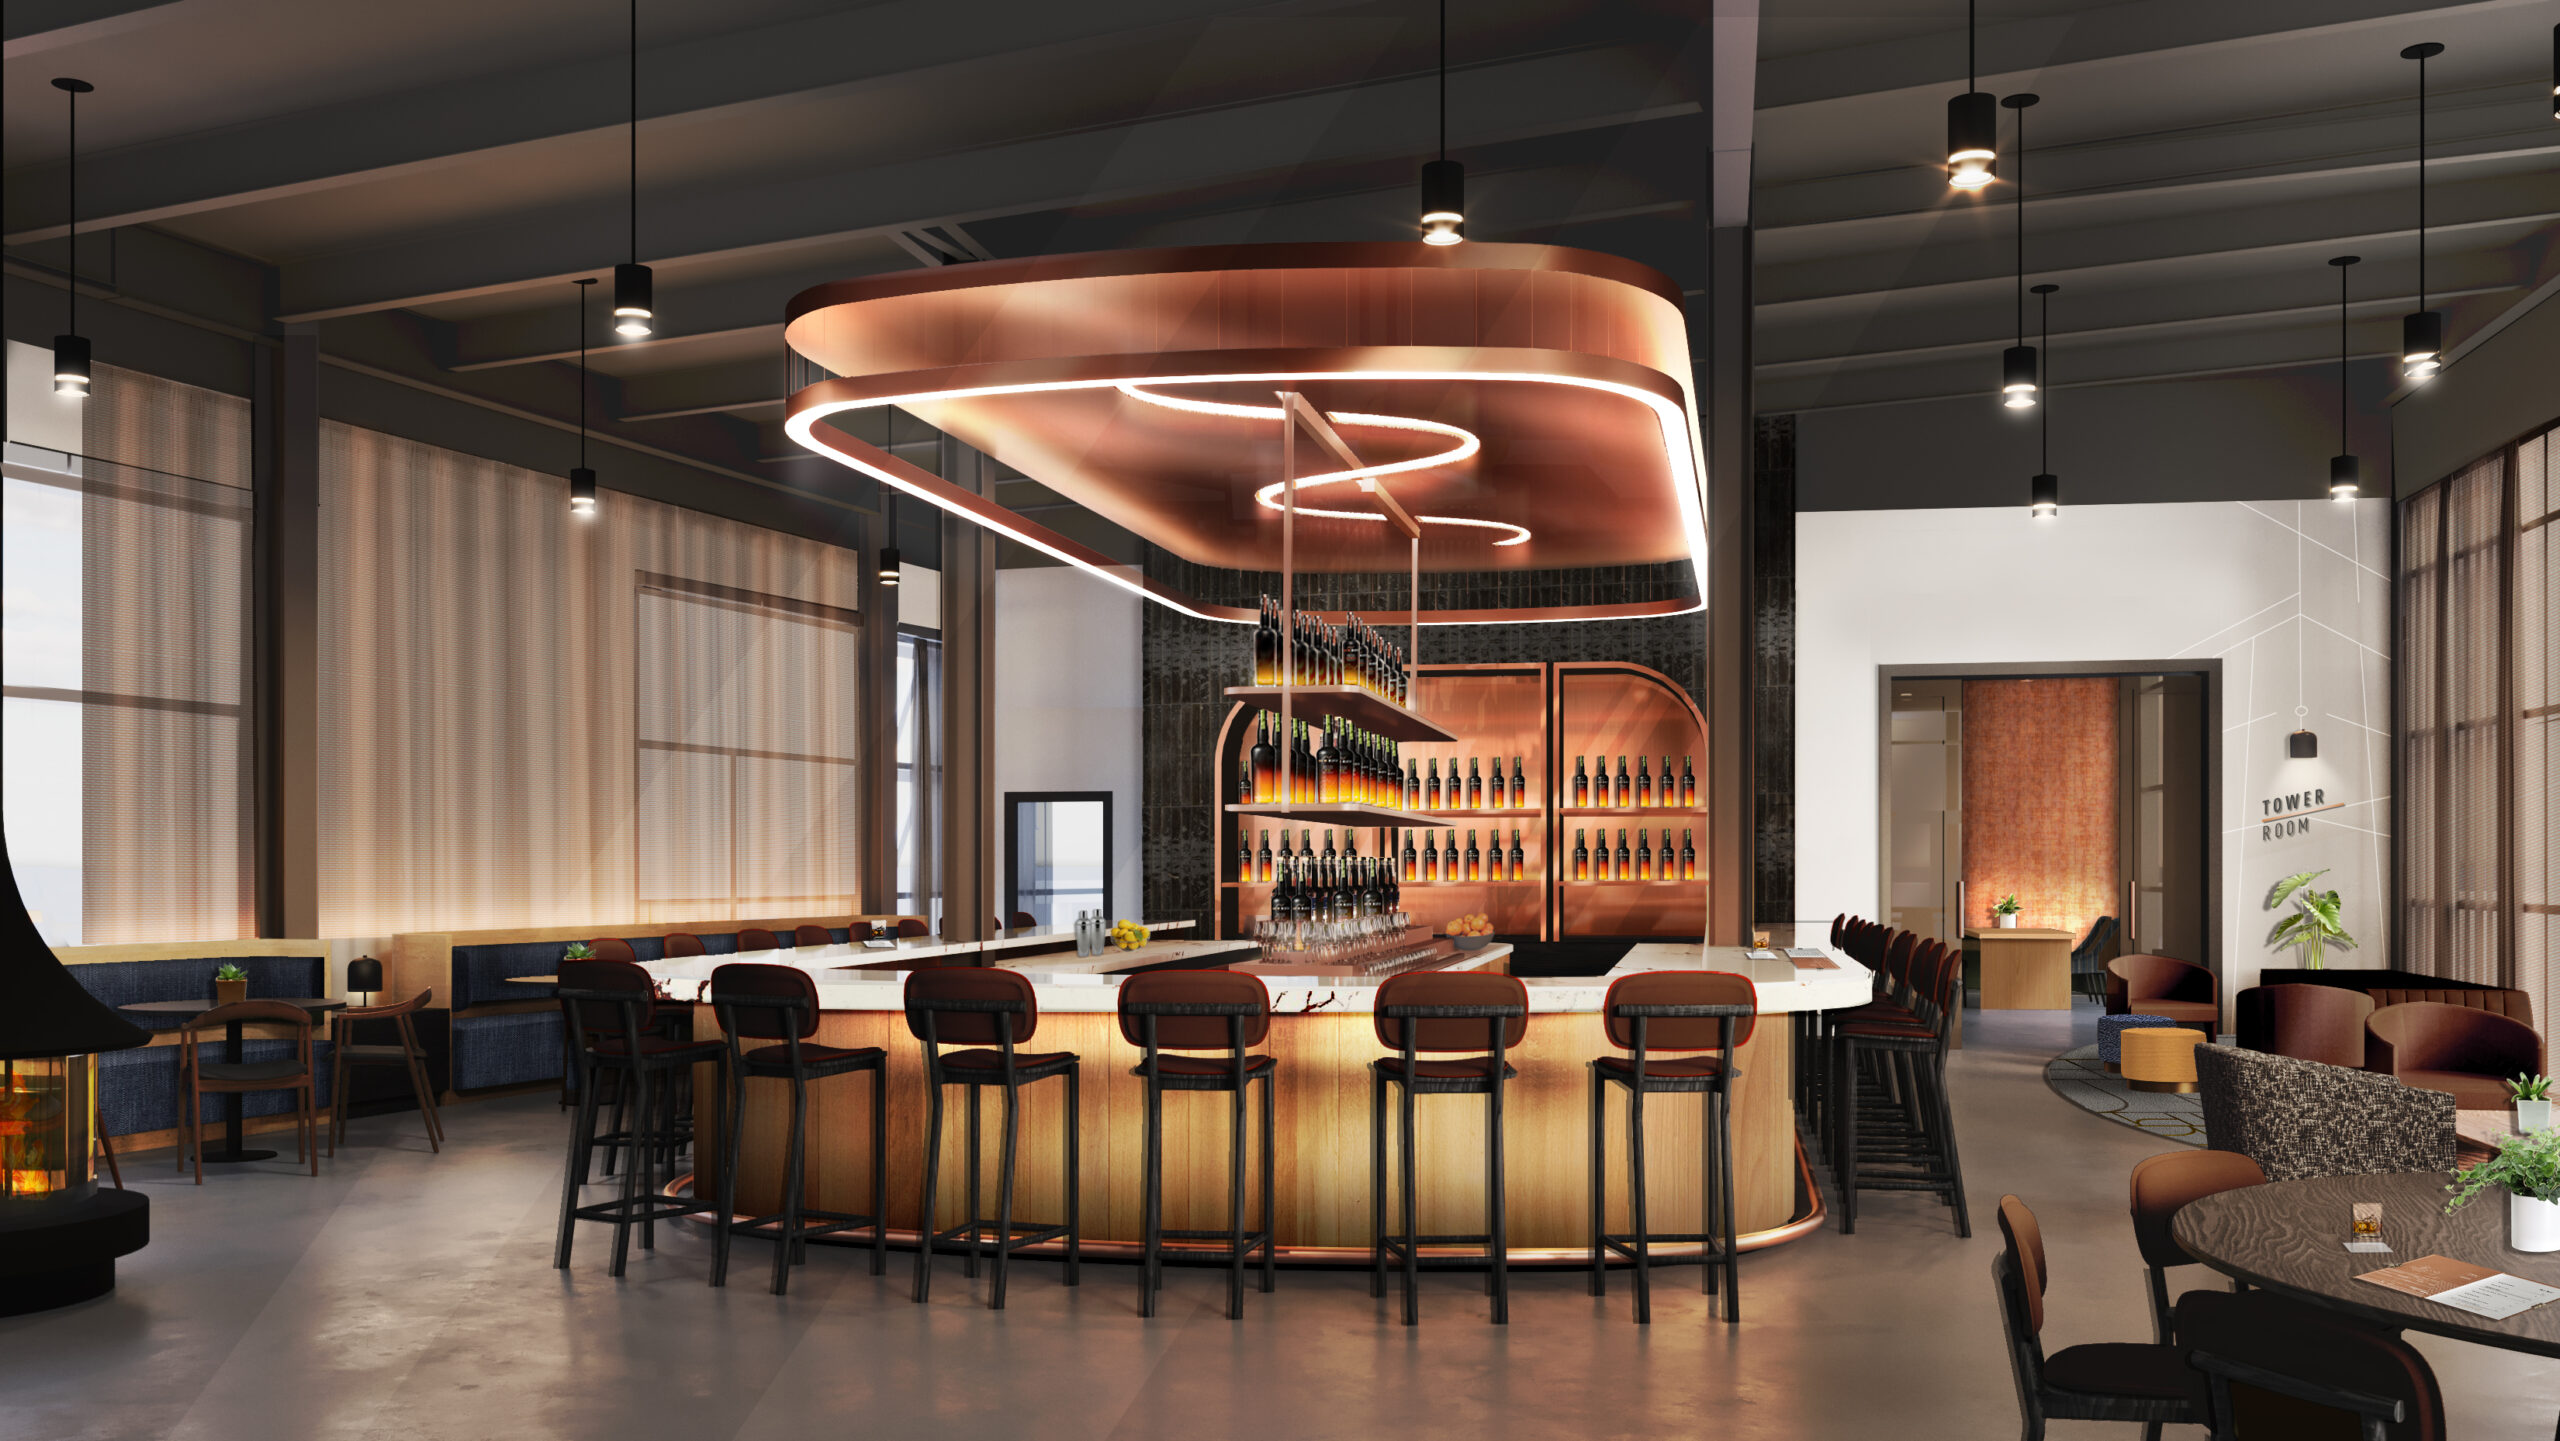 U shaped bar rendering featuring overhead custom lighting and seating